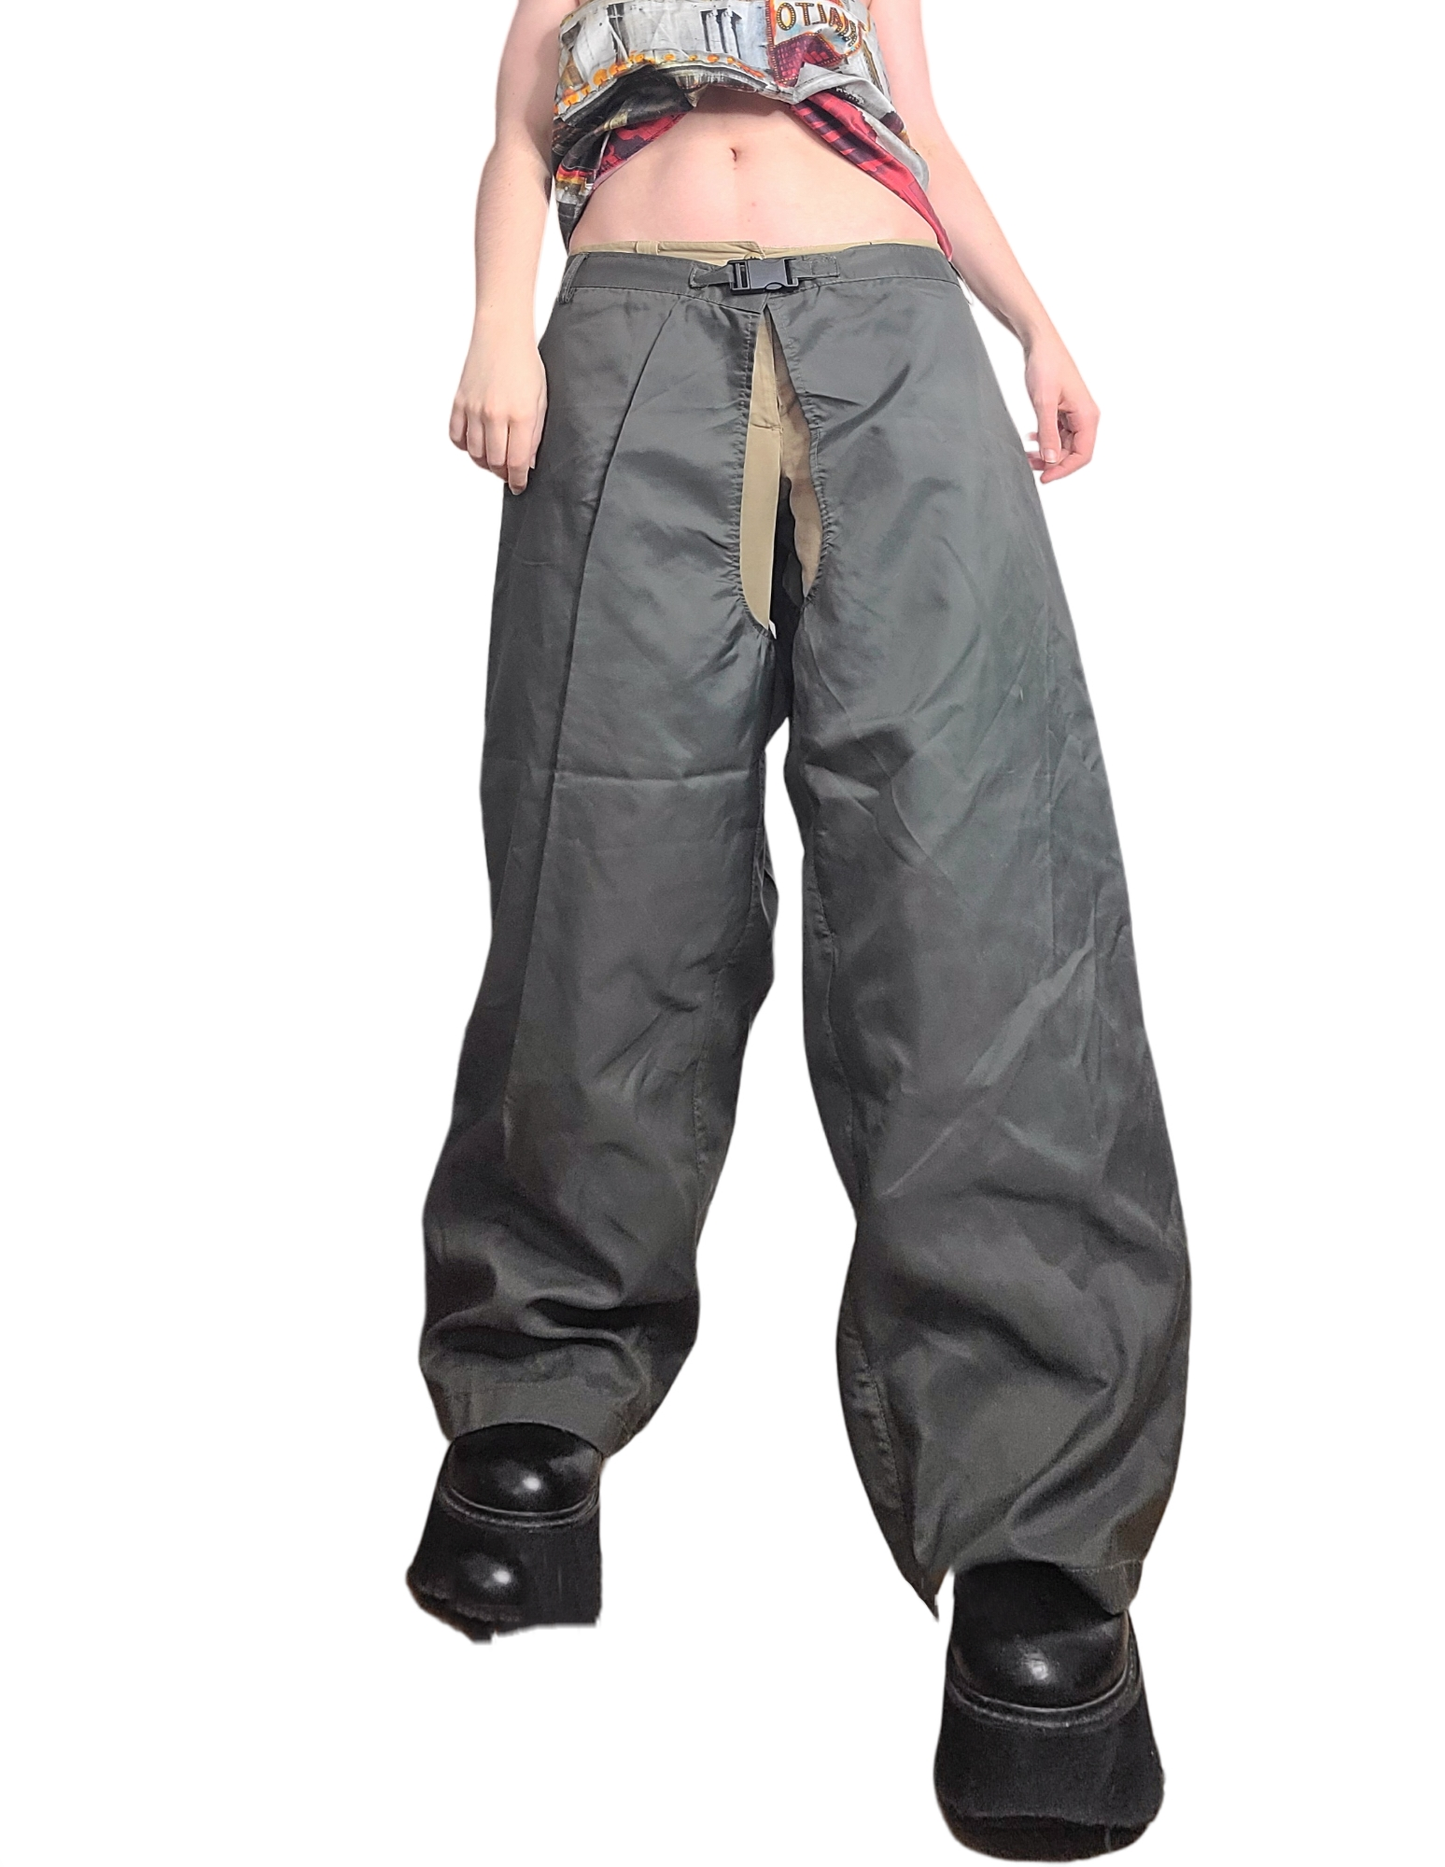 Sur-pantalon gorpcore oversize